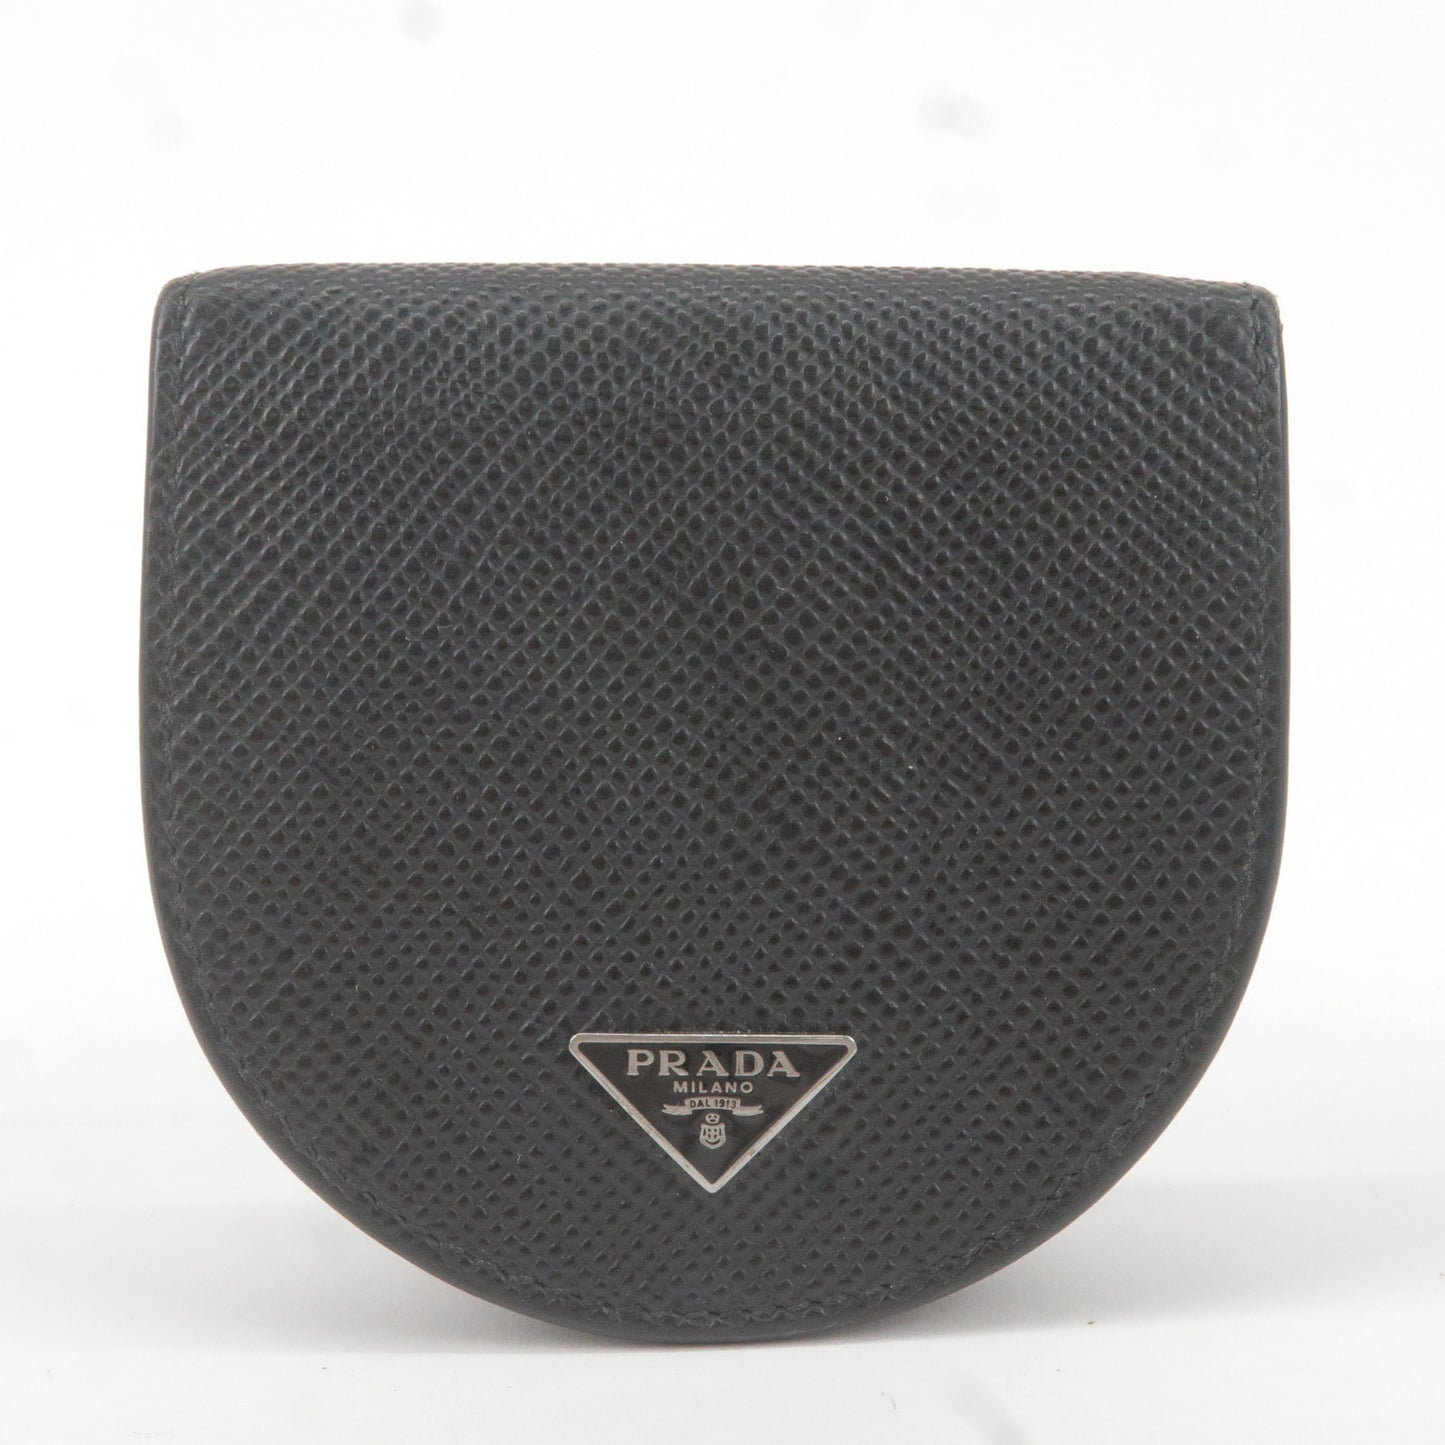 PRADA Logo Leather Coin Case Mini Wallet Black Silver